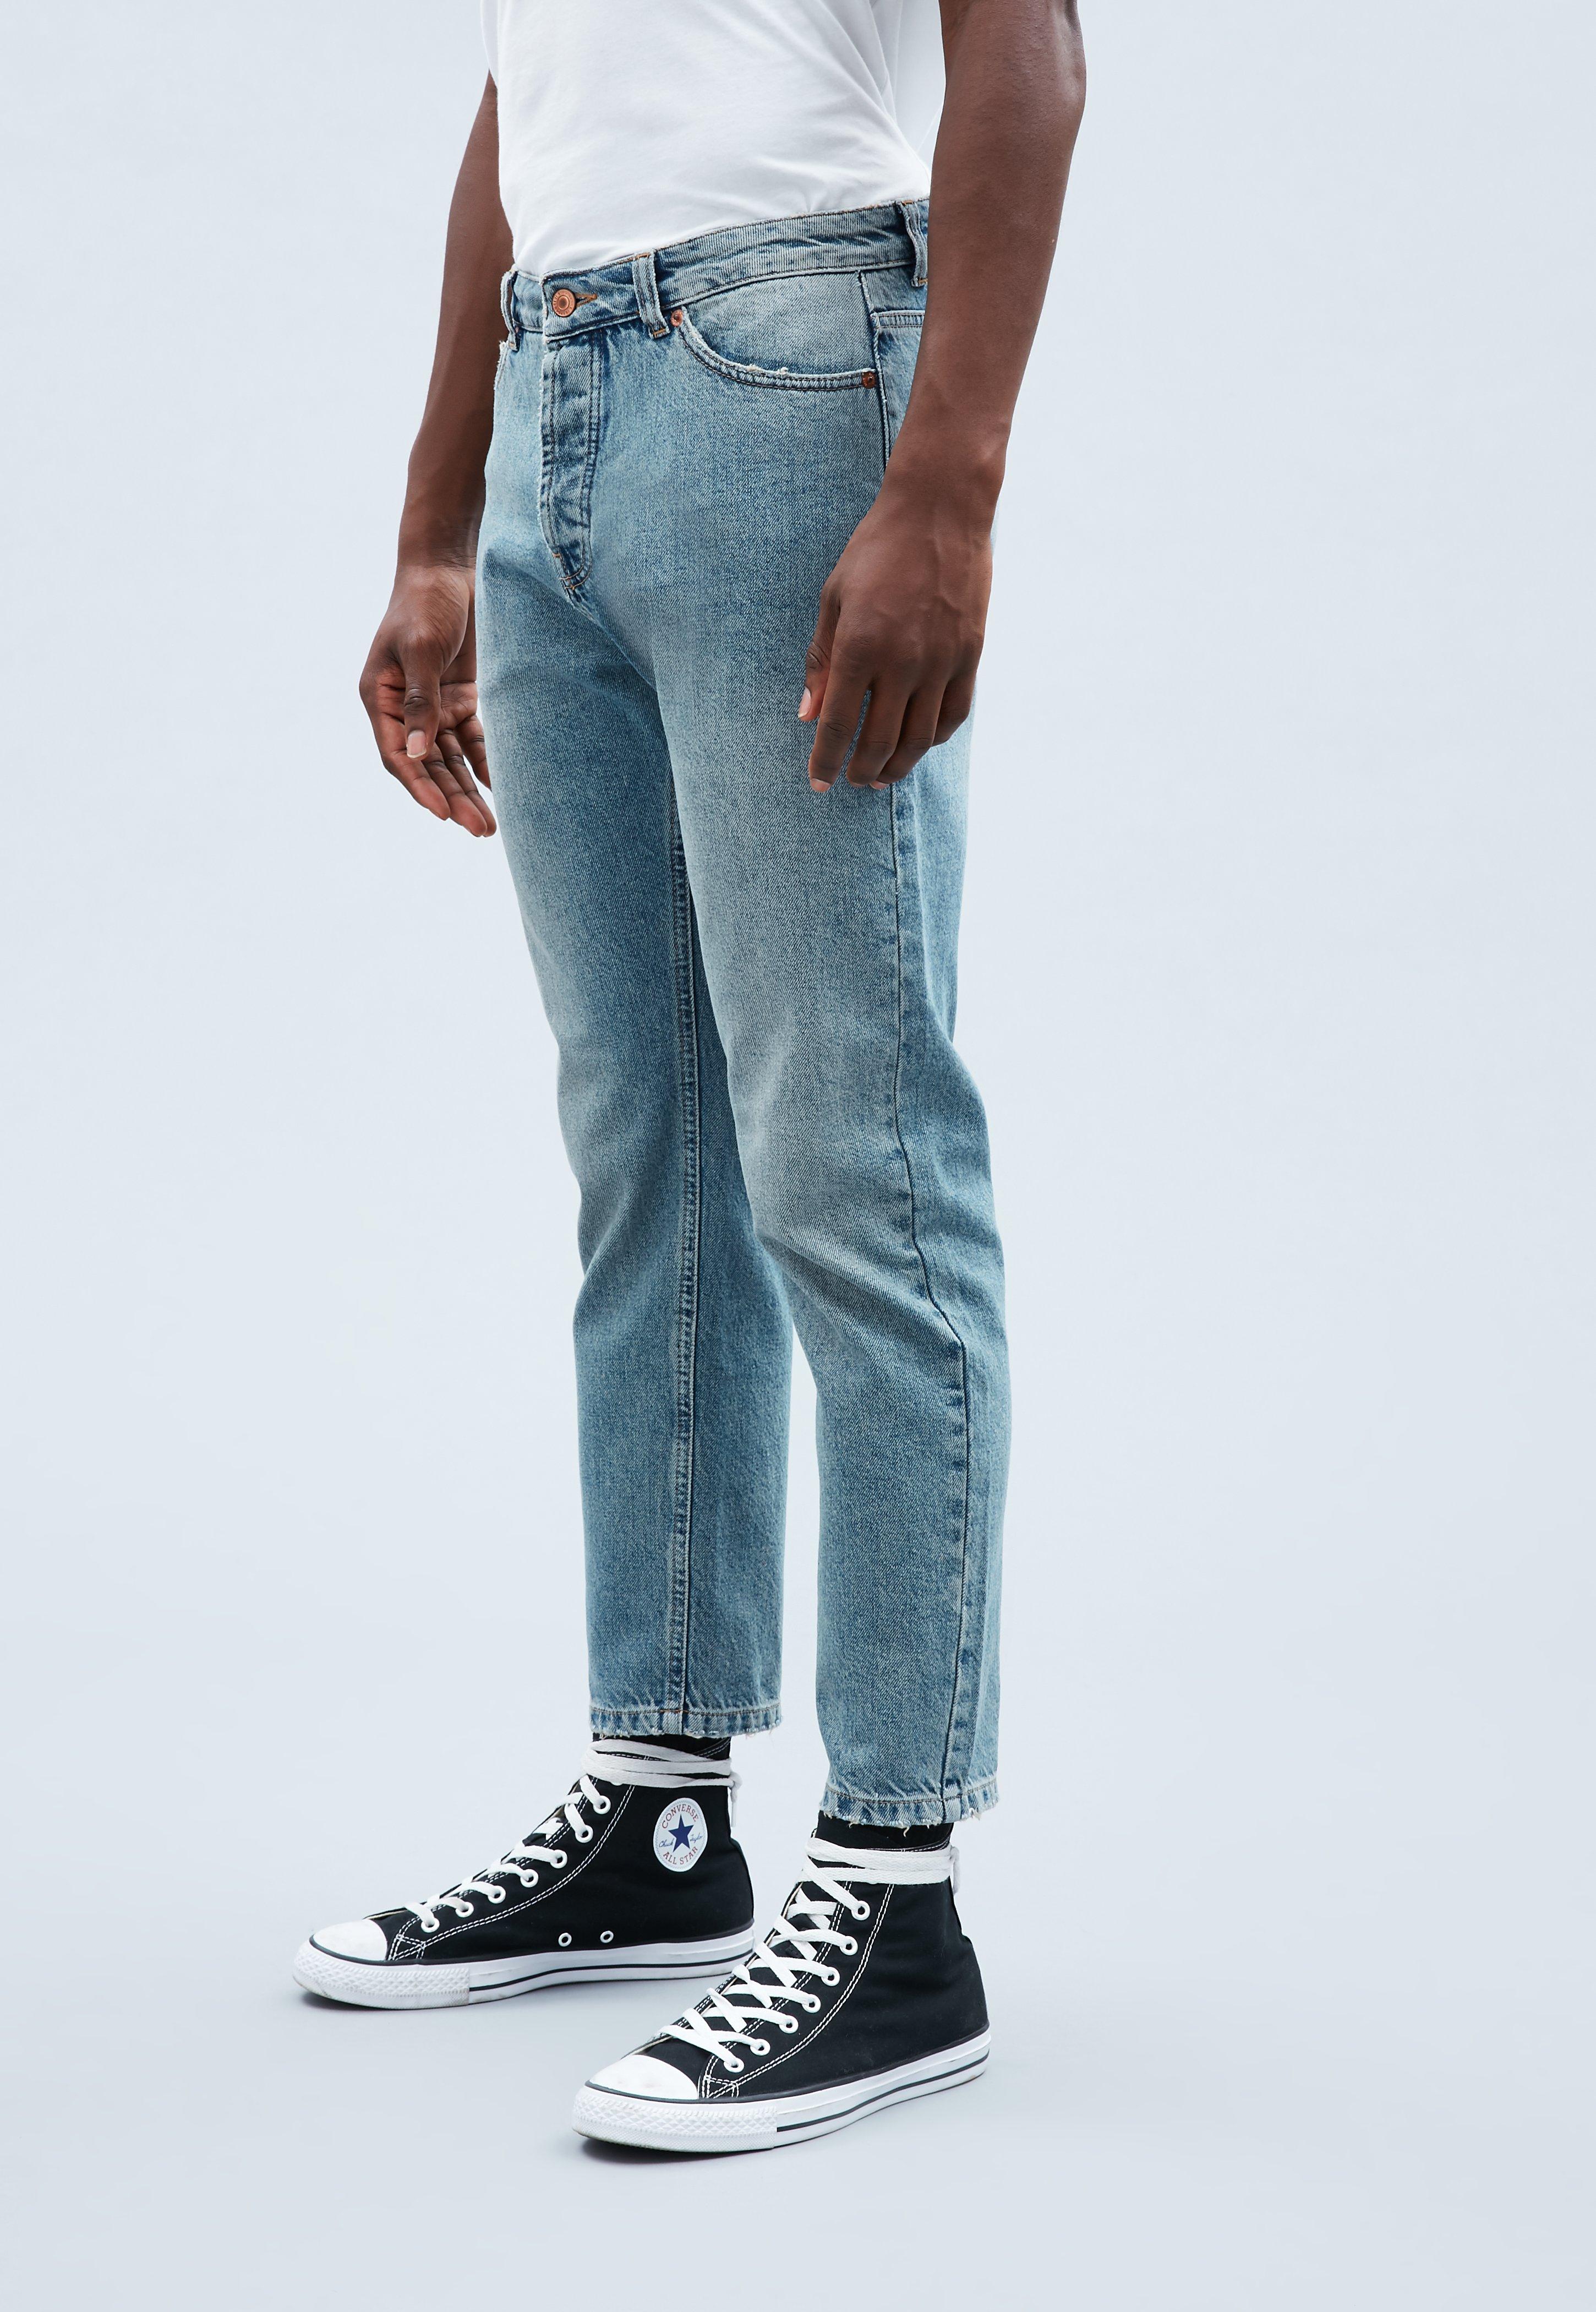 Men's Jeans | Shop Denim Jeans for Men Online | Mennace